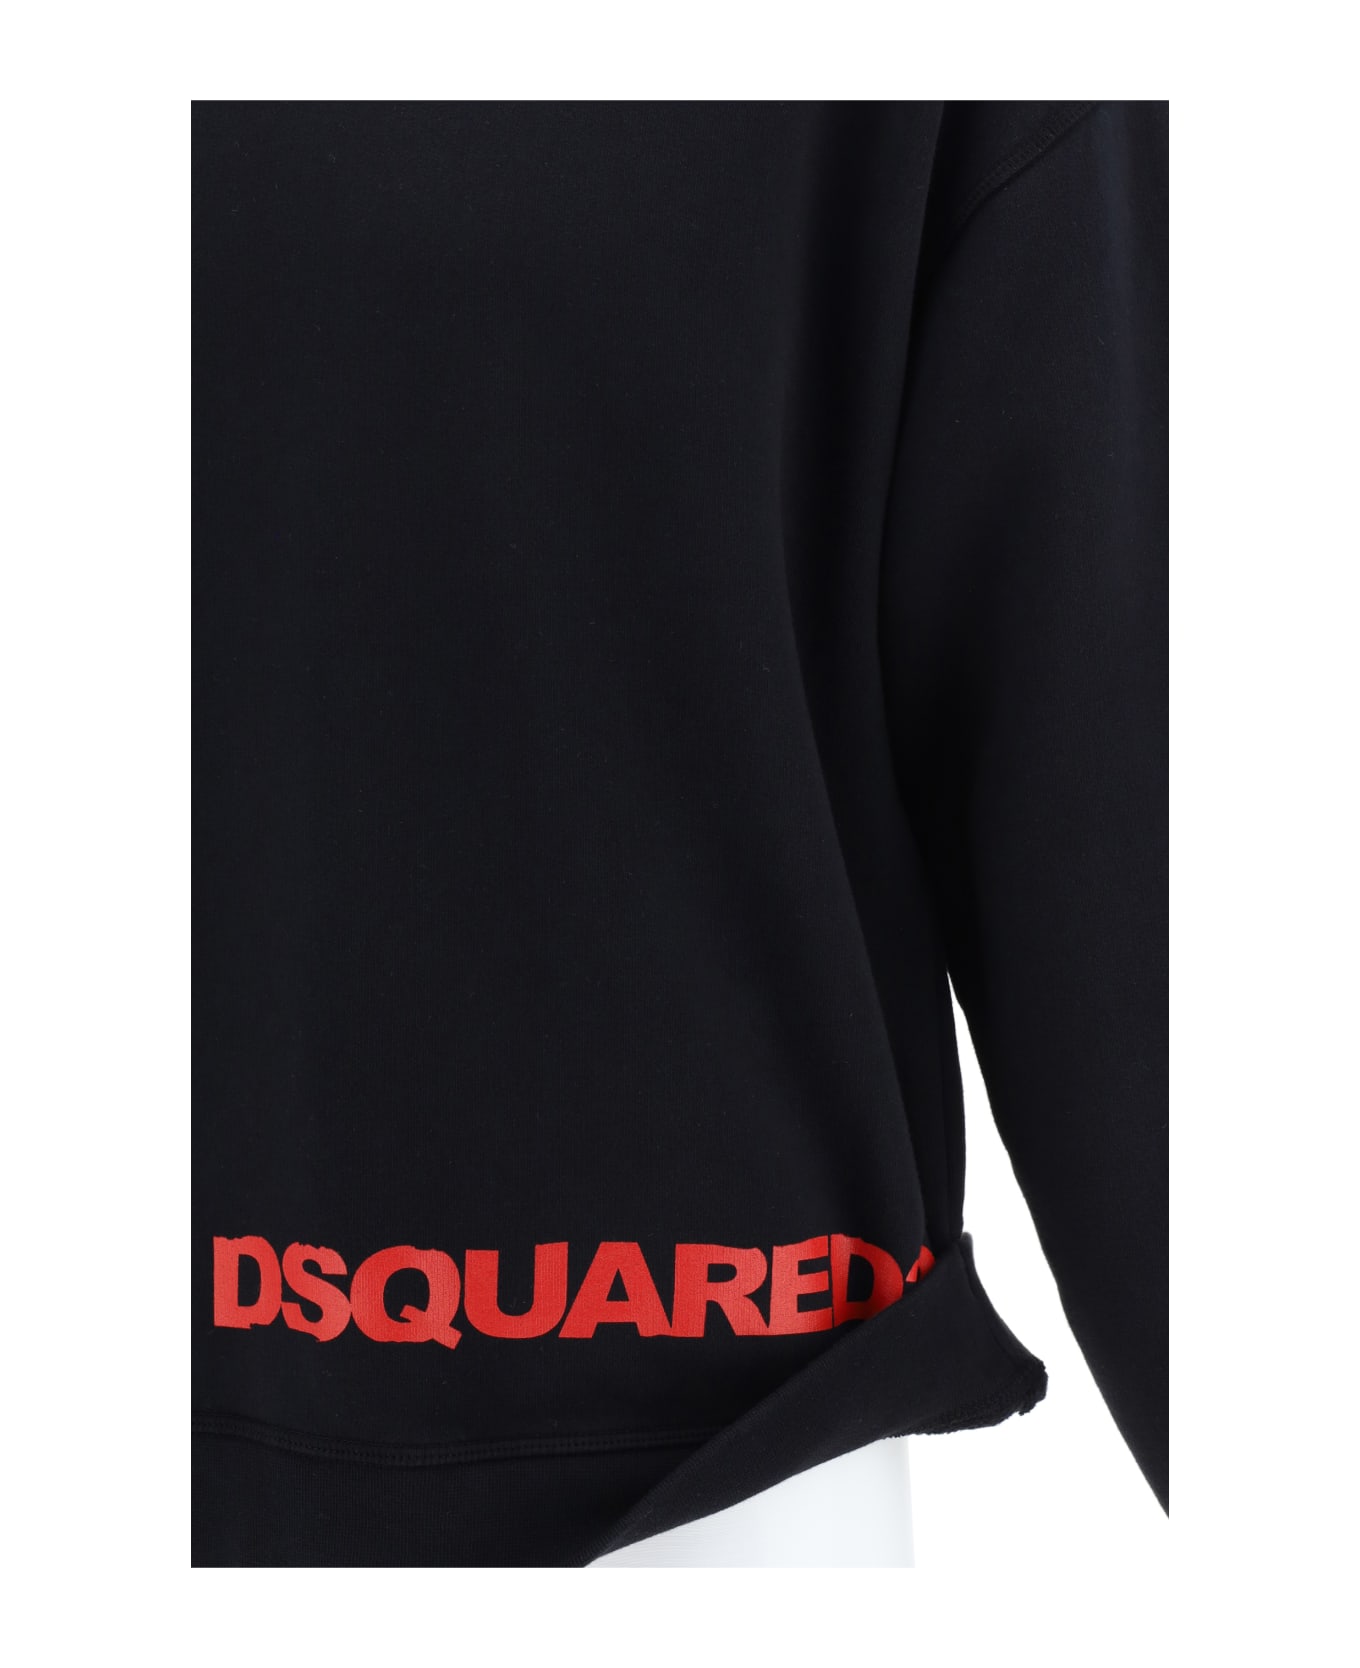 Dsquared2 Sweatshirt - Black